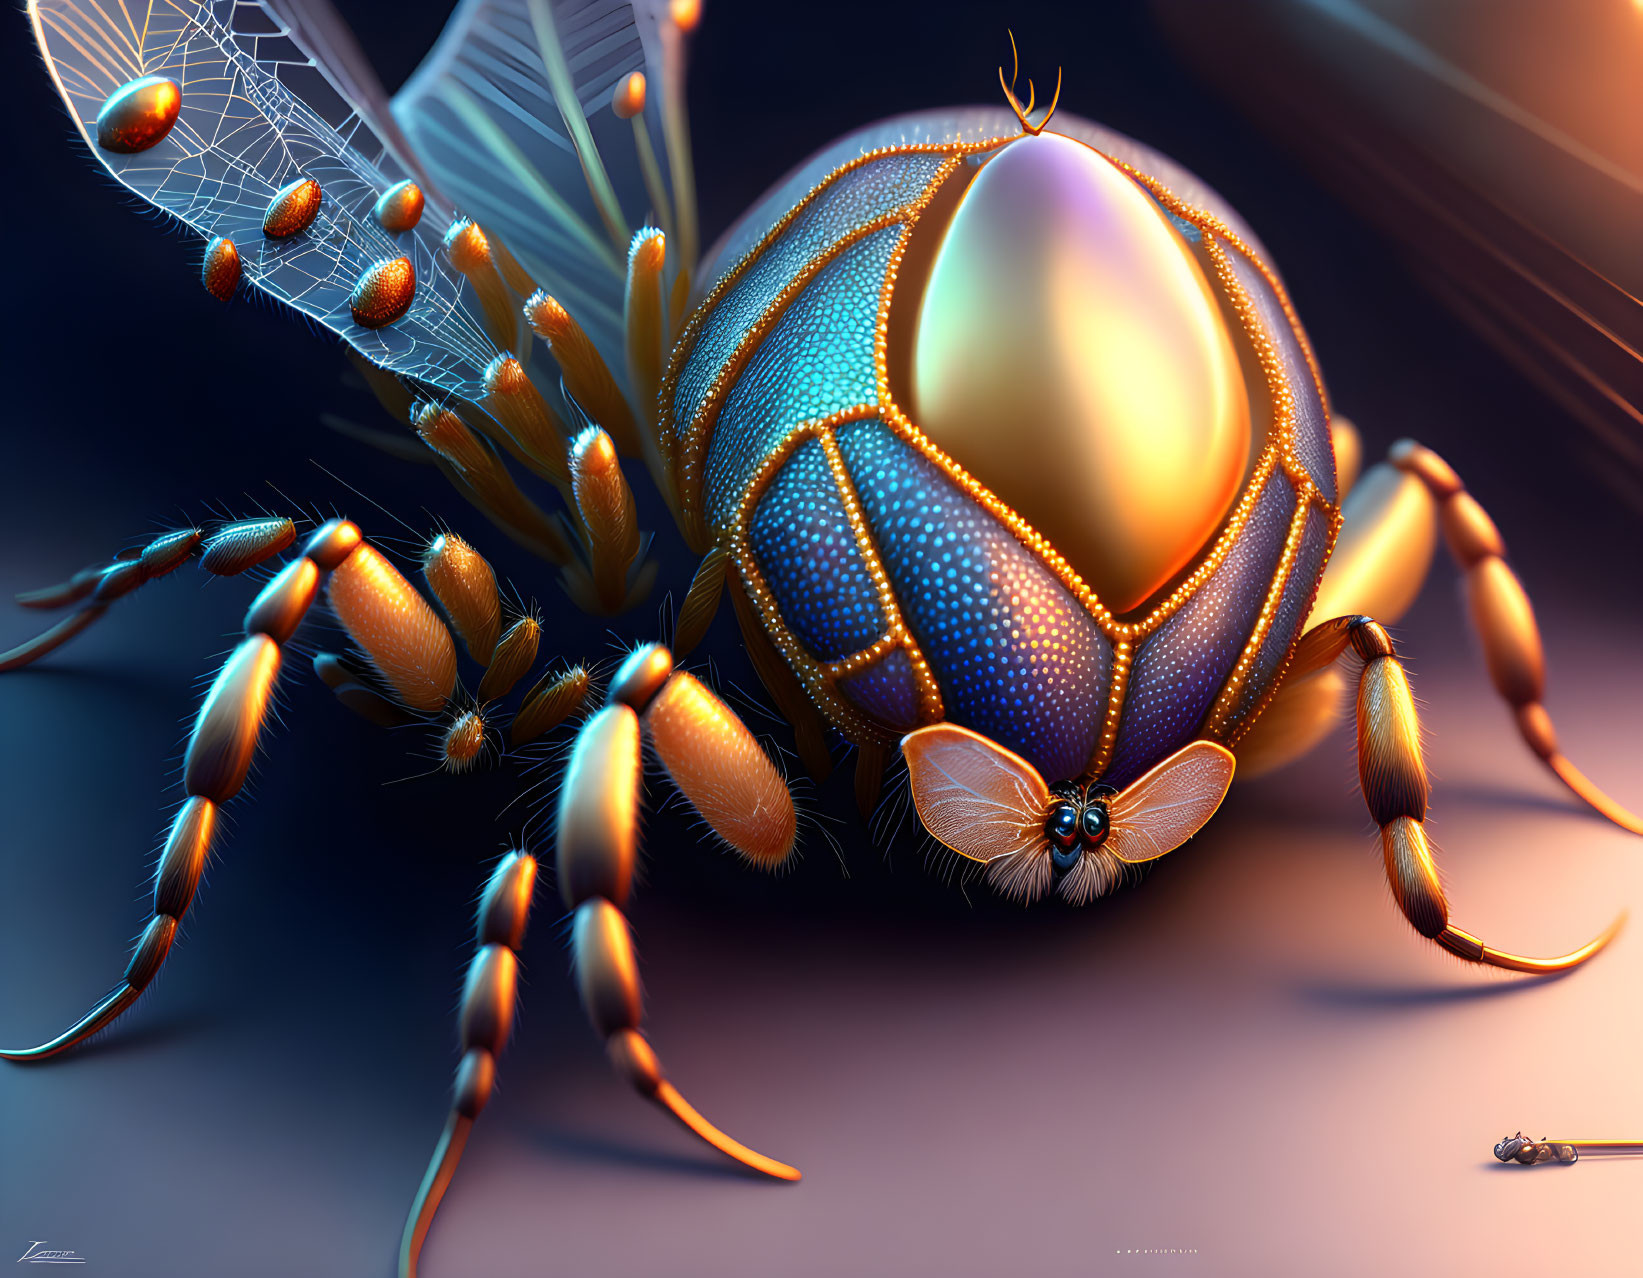 Vibrant futuristic spider artwork with blue and orange hues